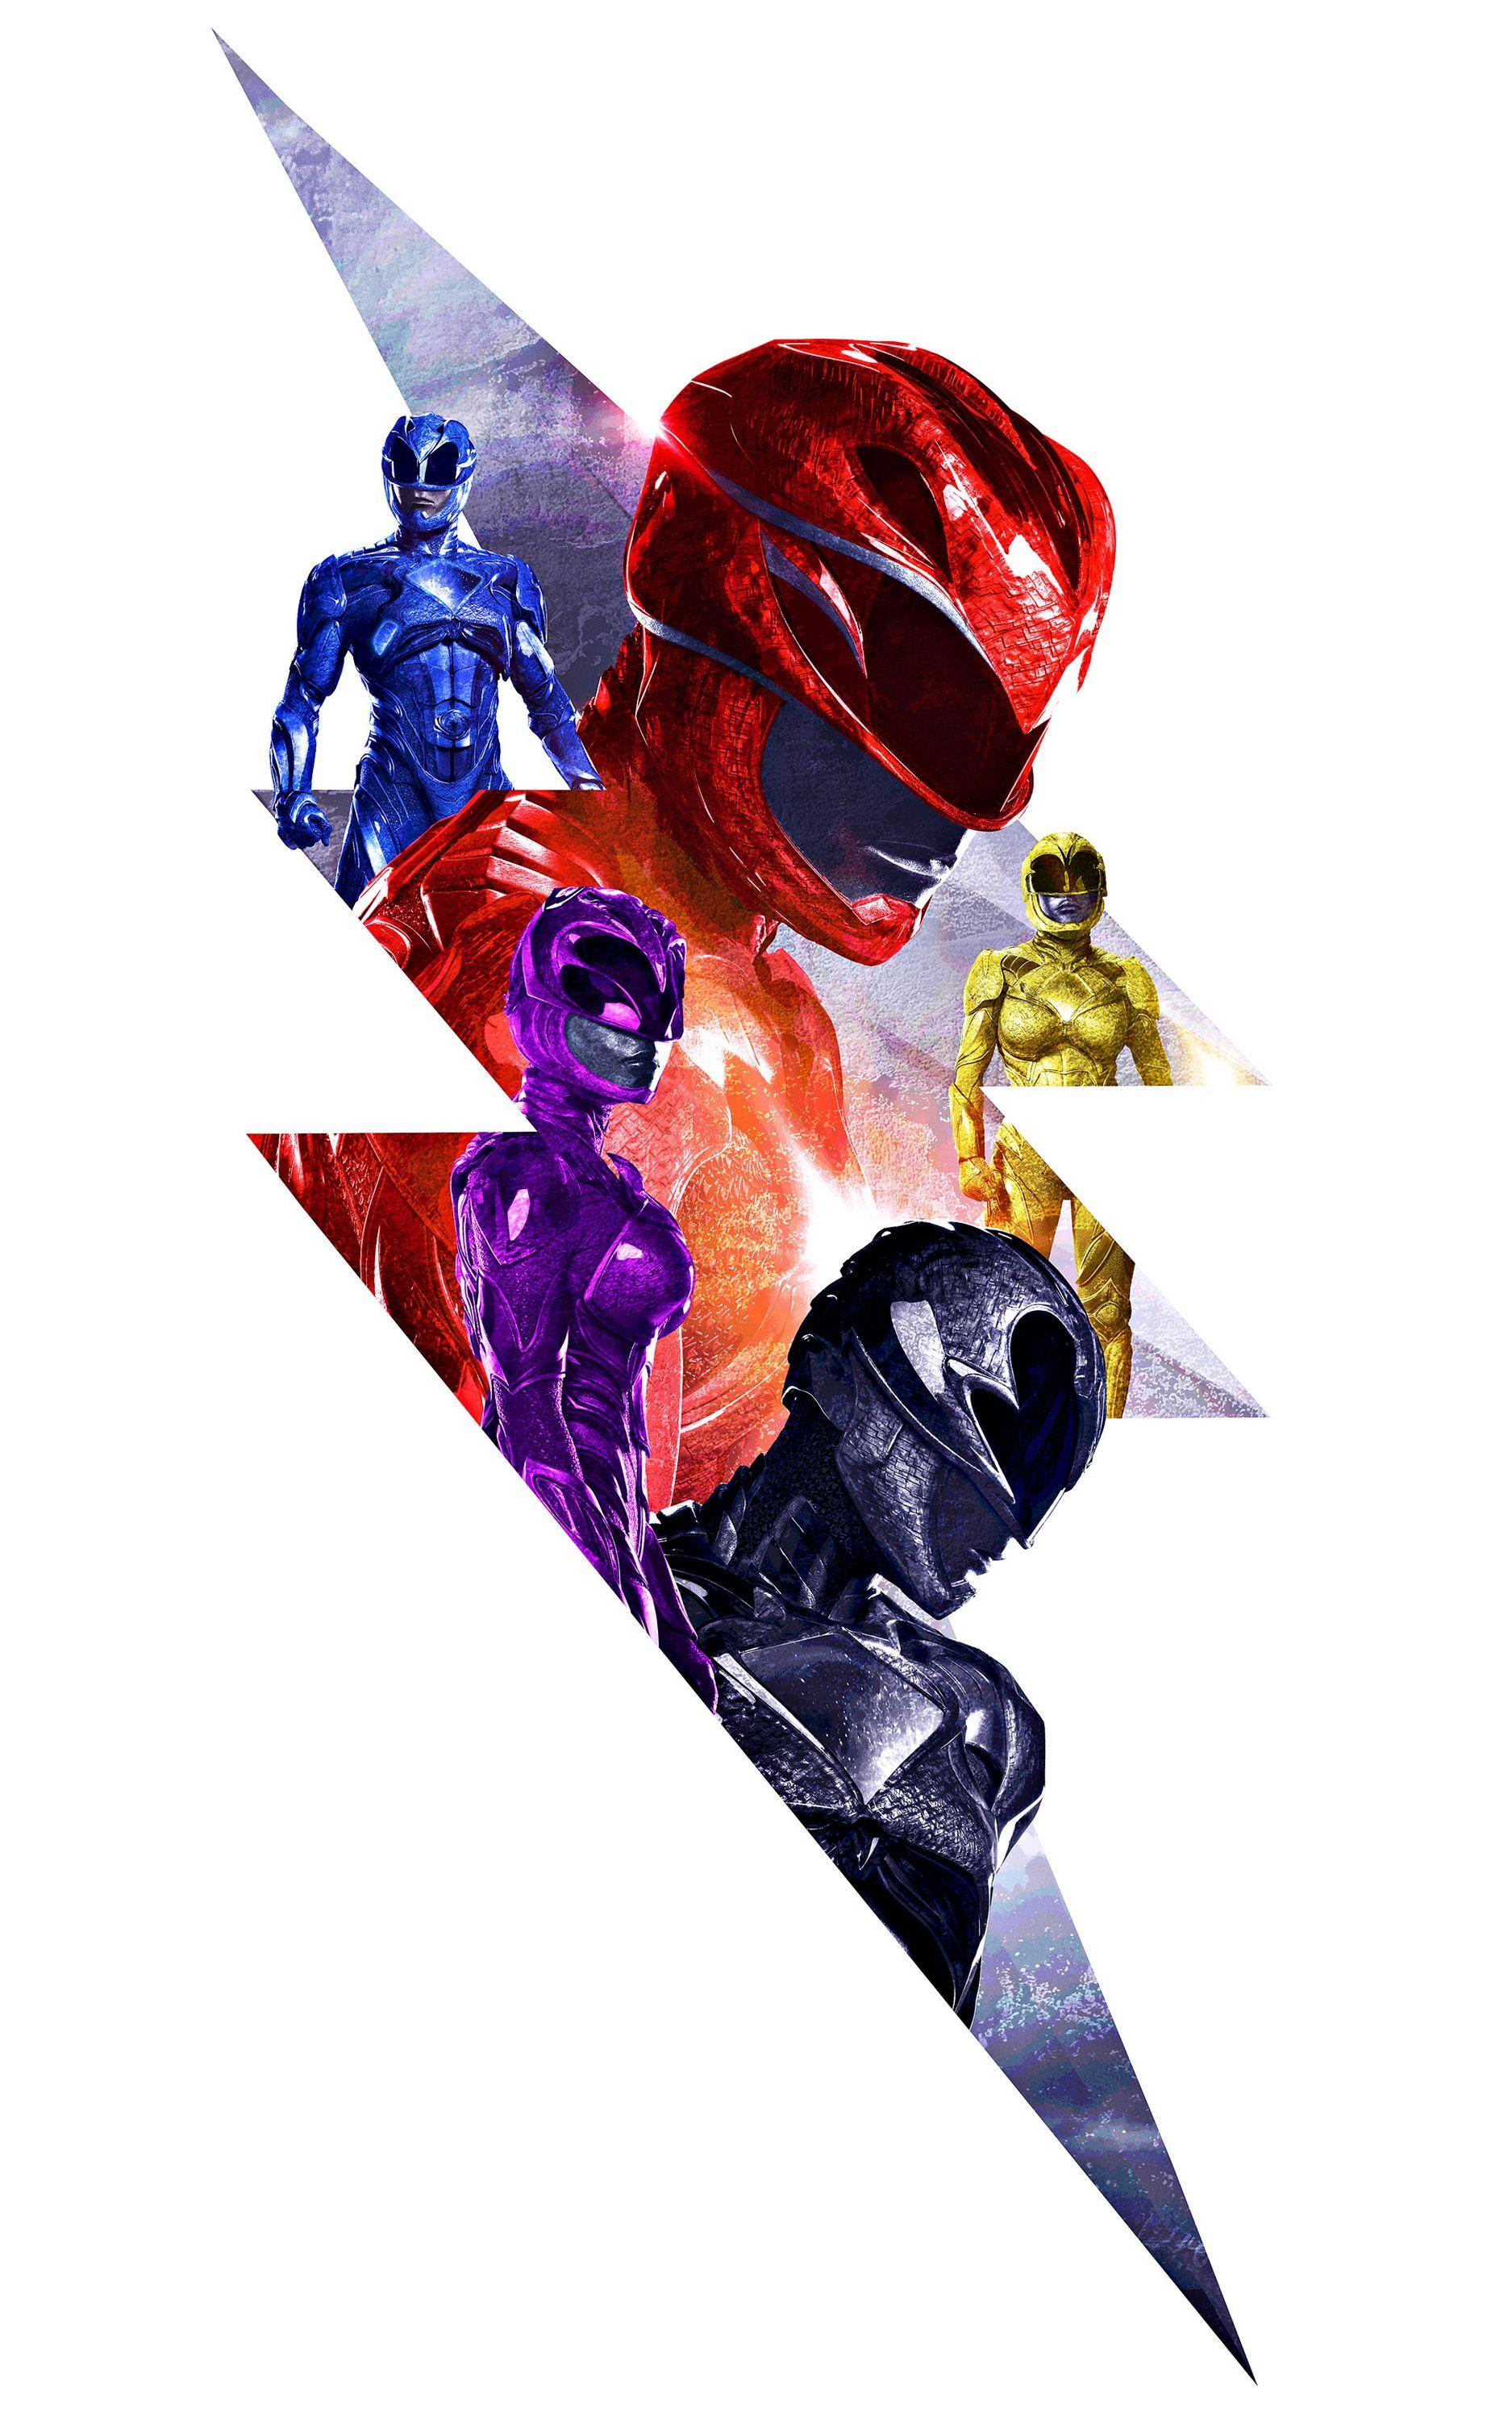 Mobile Wallpaper 107 Movie of the Week: Power Rangers 10